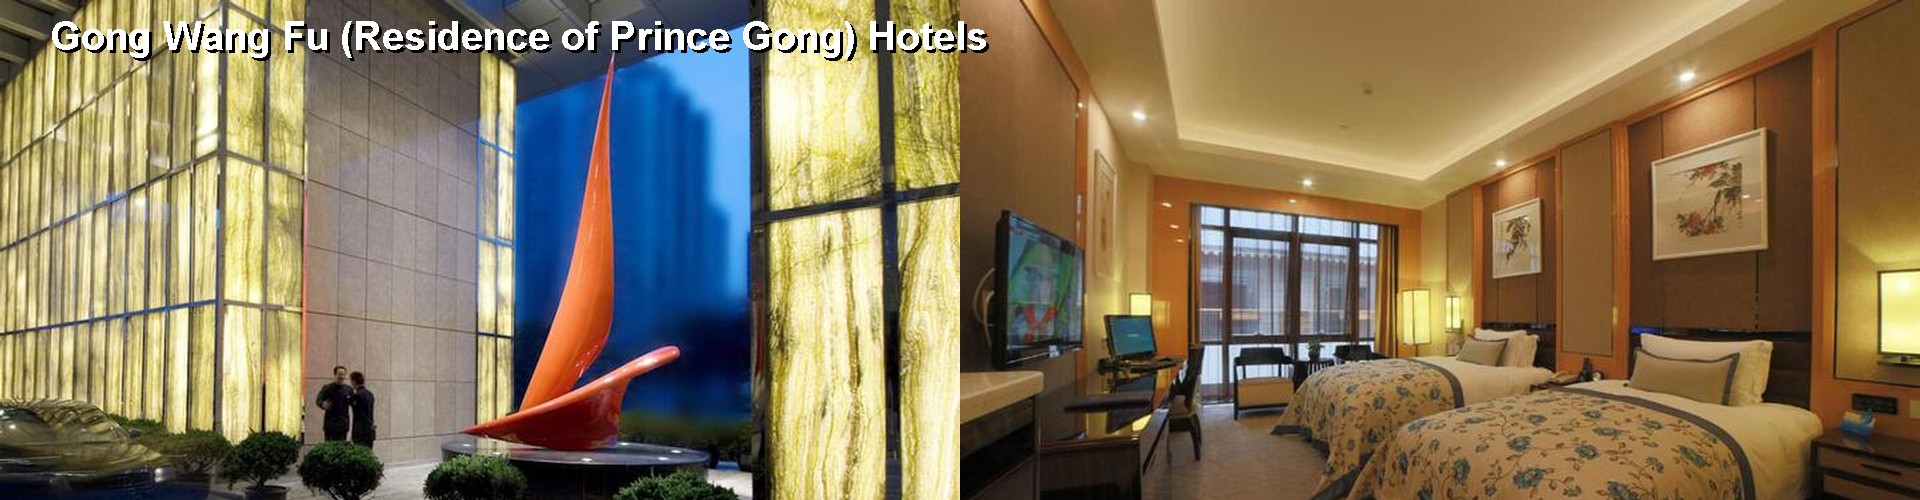 4 Best Hotels near Gong Wang Fu (Residence of Prince Gong)